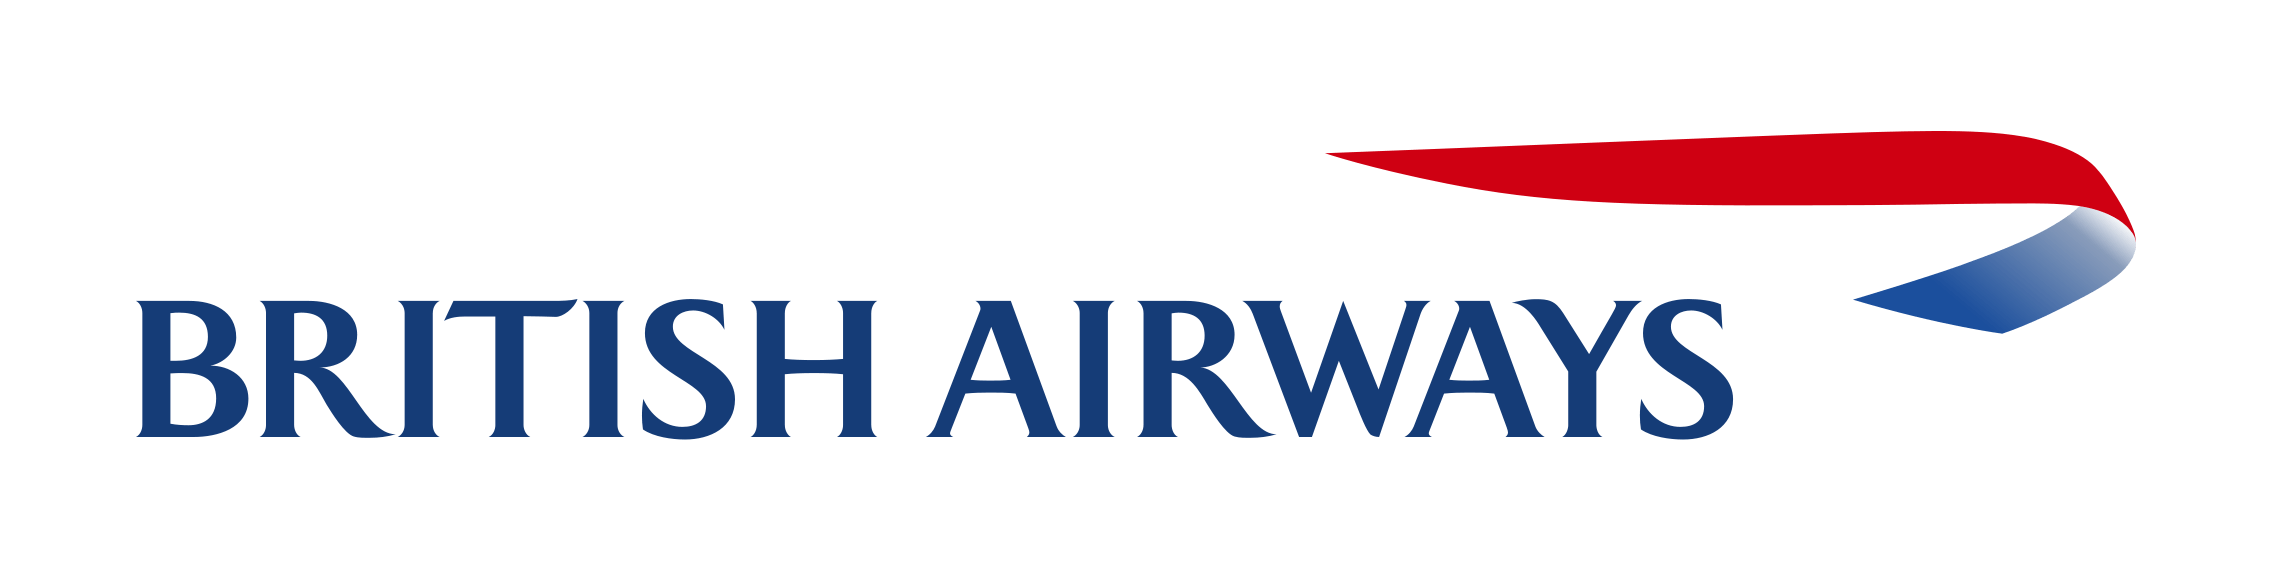 British Airline Logo - British Airways Logo, British Airways Symbol Meaning, History and ...